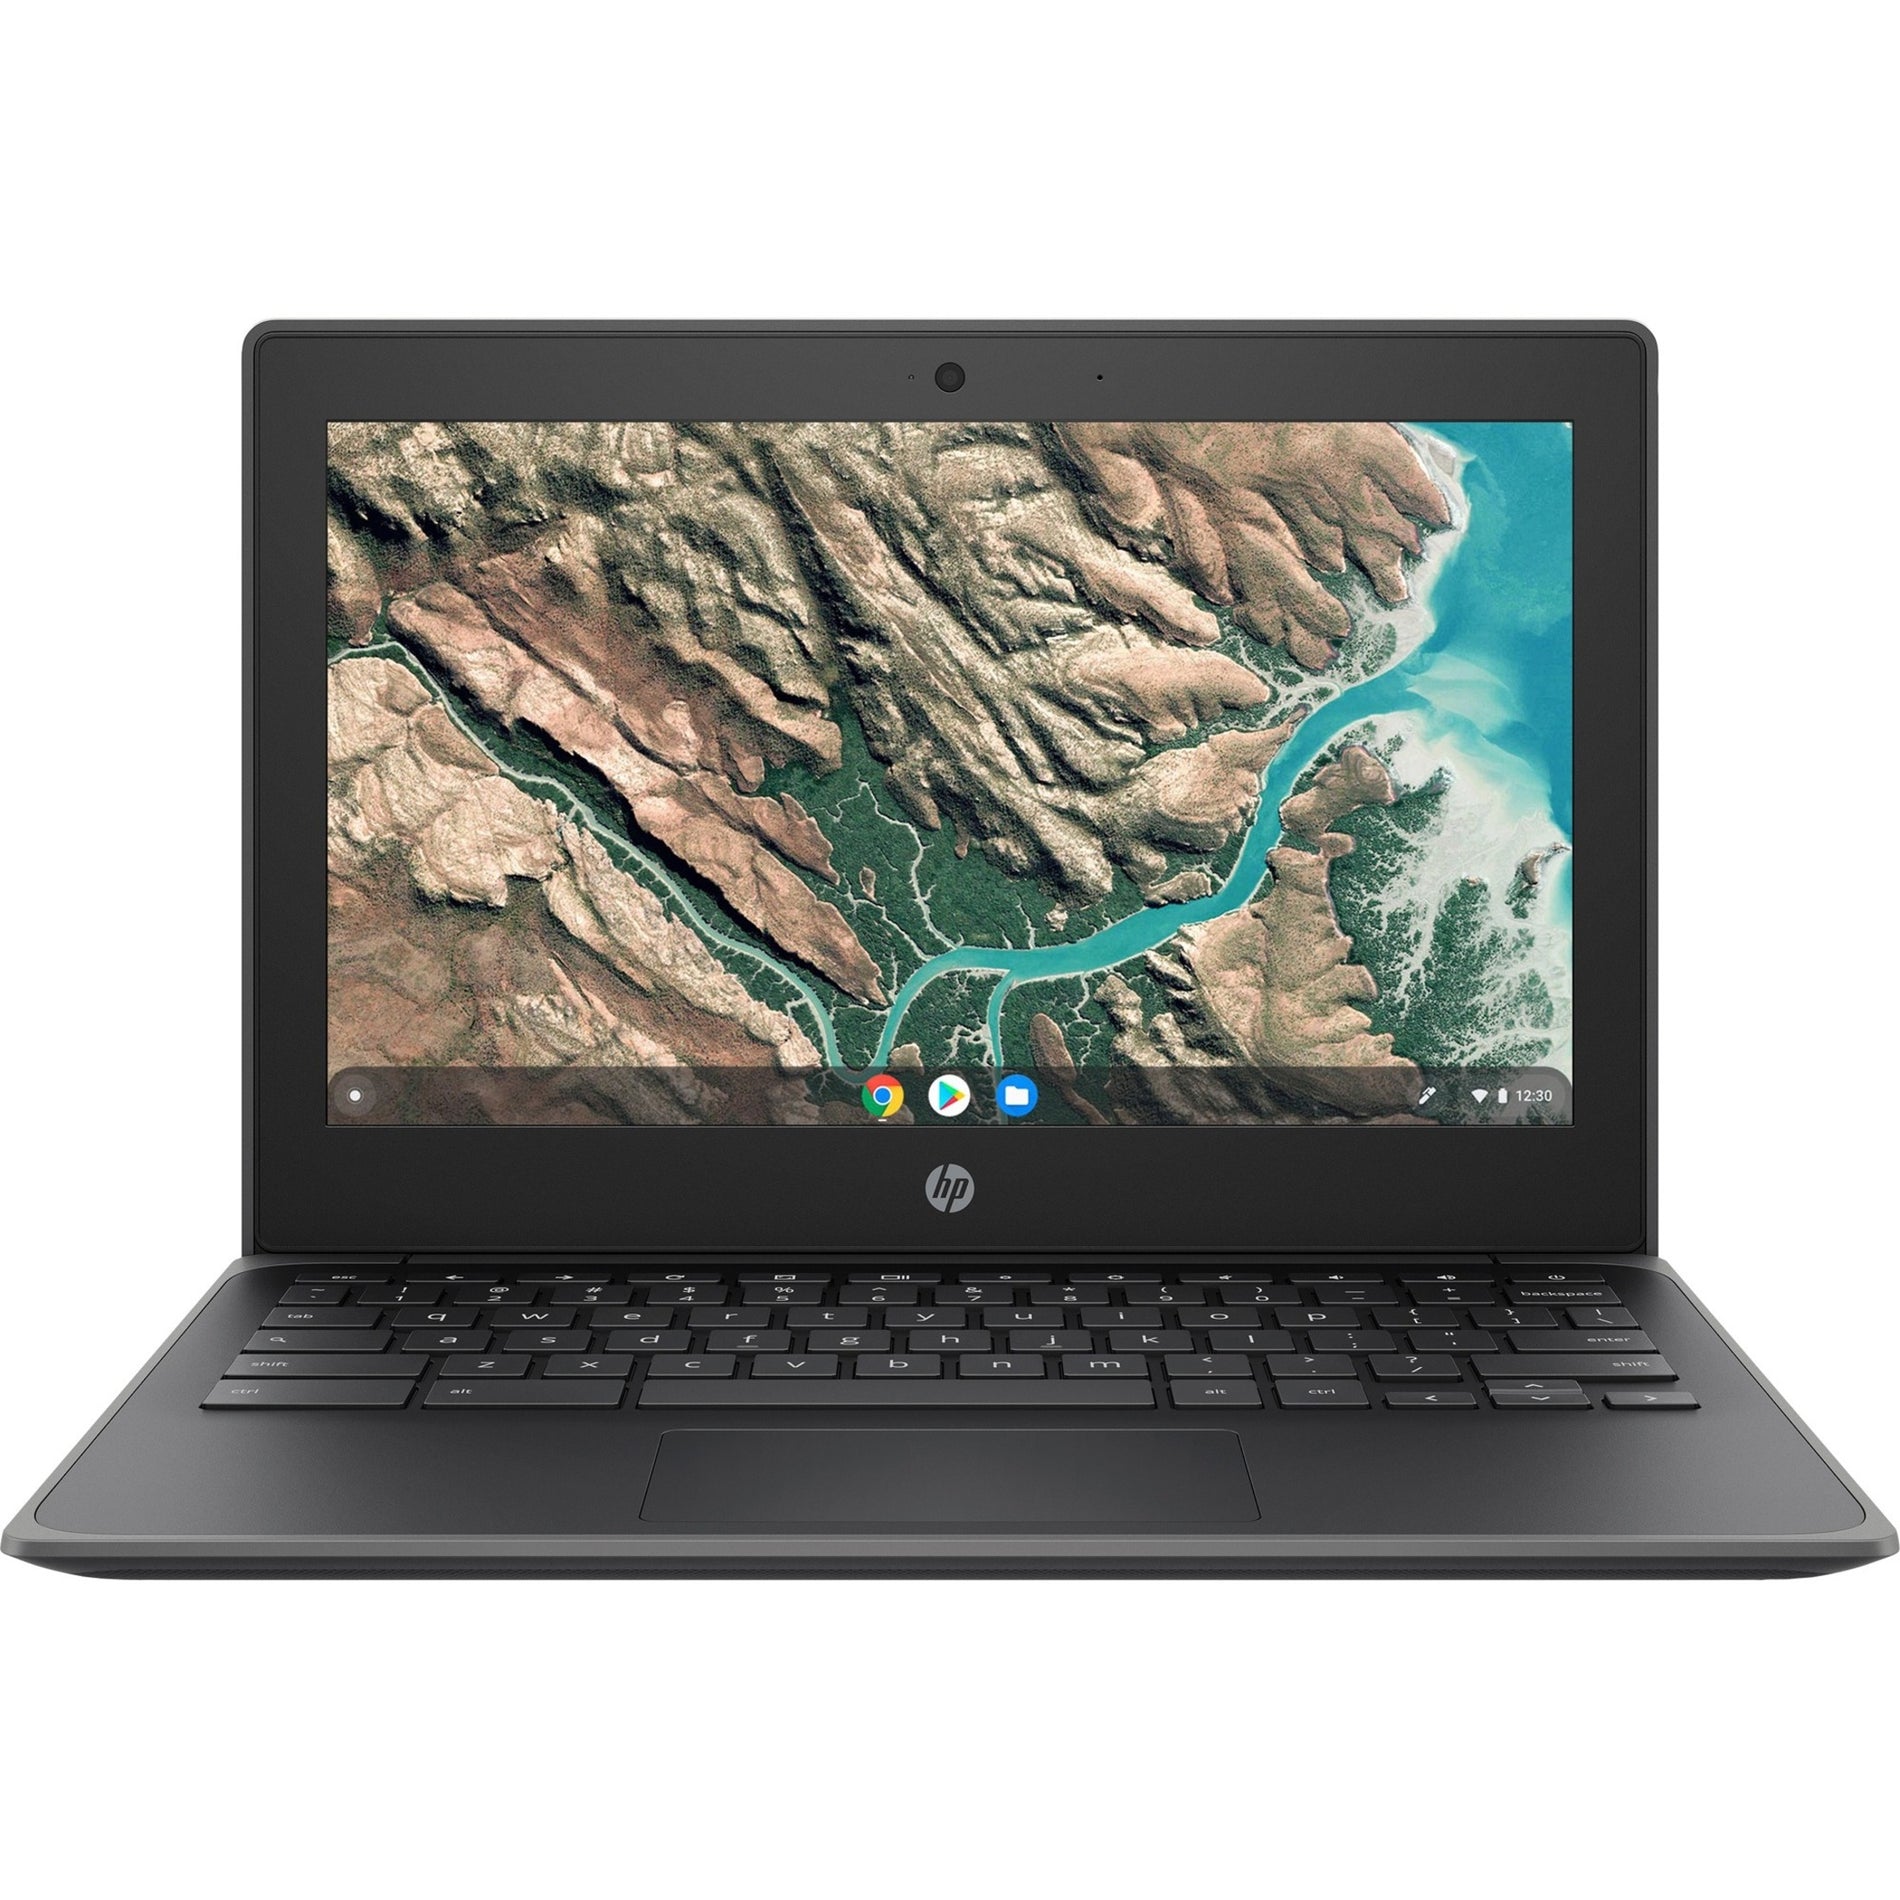 HPI SOURCING - NEW Chromebook 11 G8 EE Education Edition, 11.6" HD, Intel Celeron N4020, 4GB RAM, 32GB Flash Memory